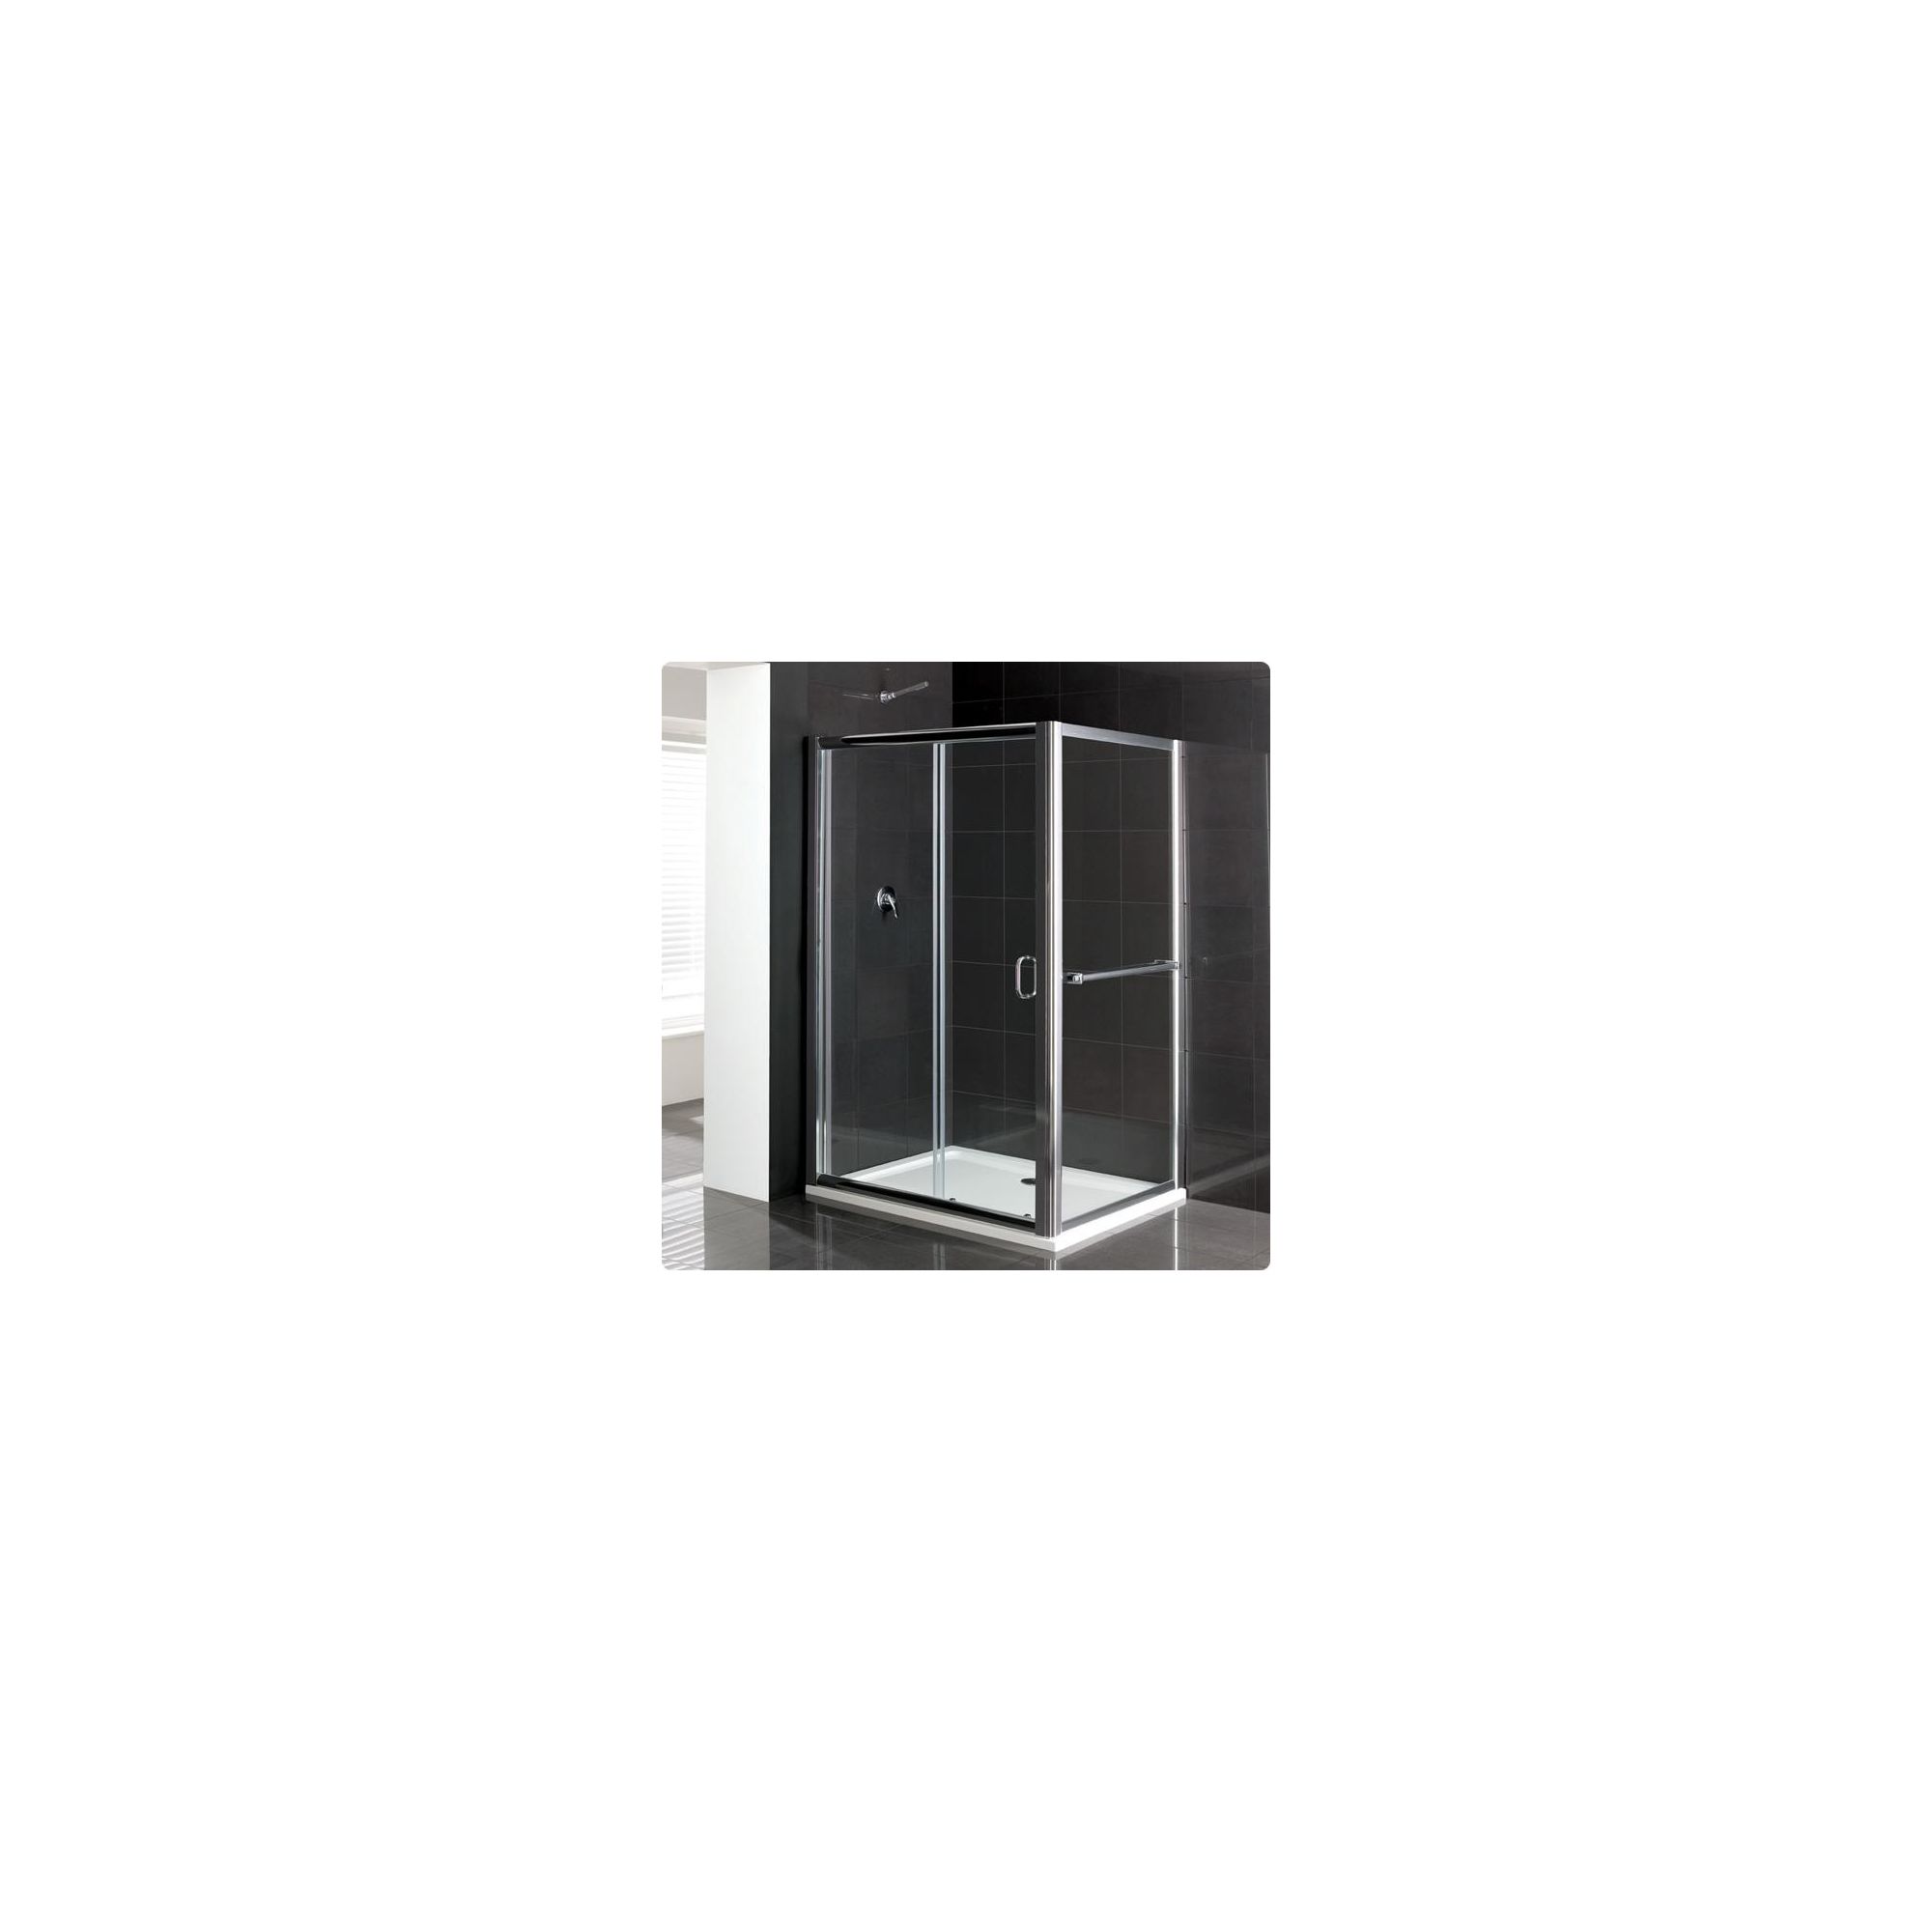 Duchy Elite Silver Sliding Door Shower Enclosure, 1000mm x 760mm, Standard Tray, 6mm Glass at Tesco Direct